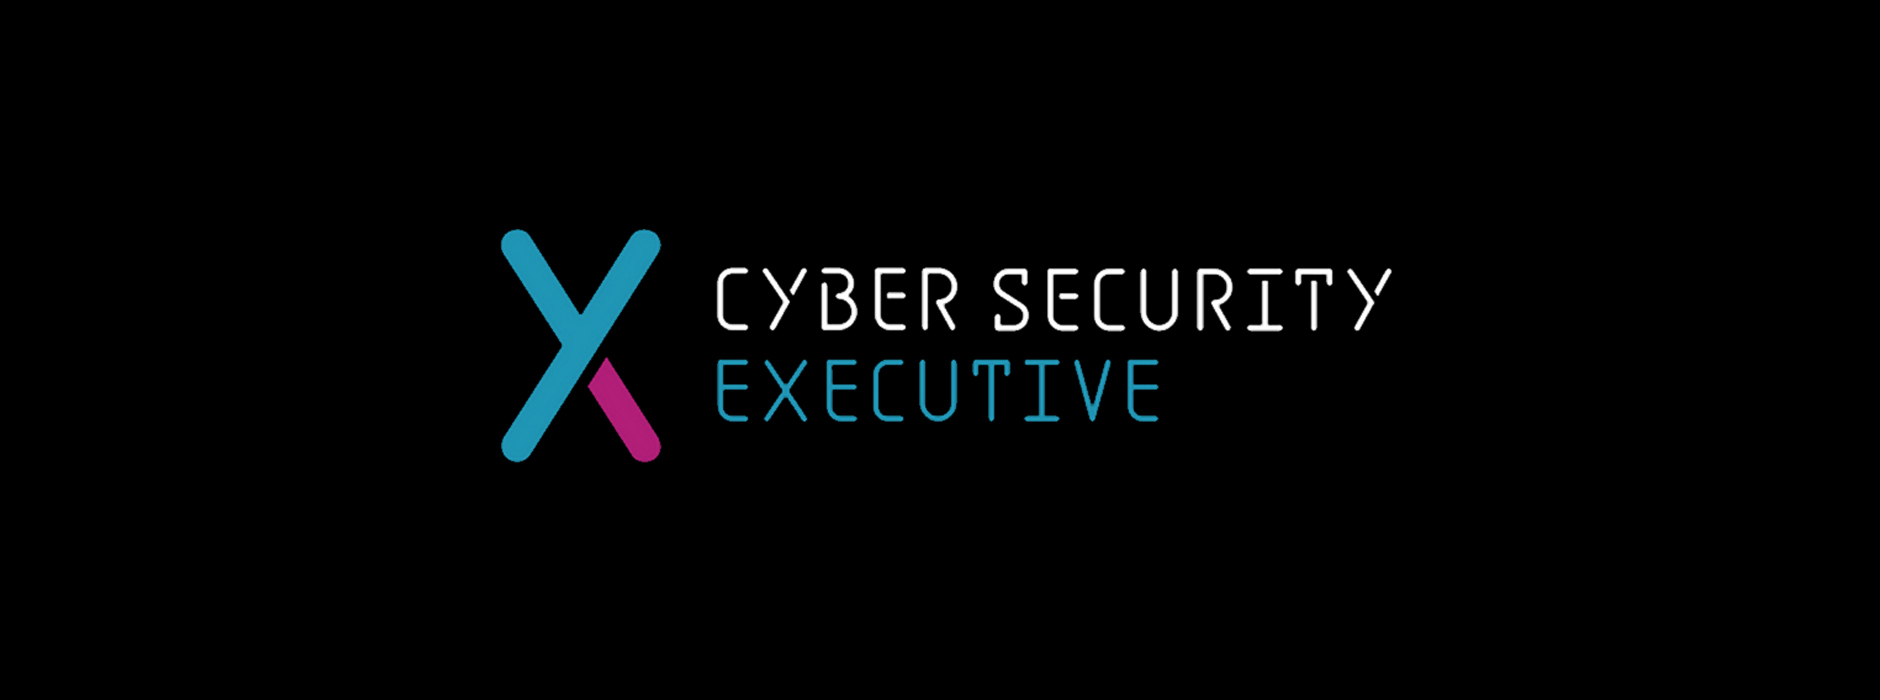 Cyber Security Executive